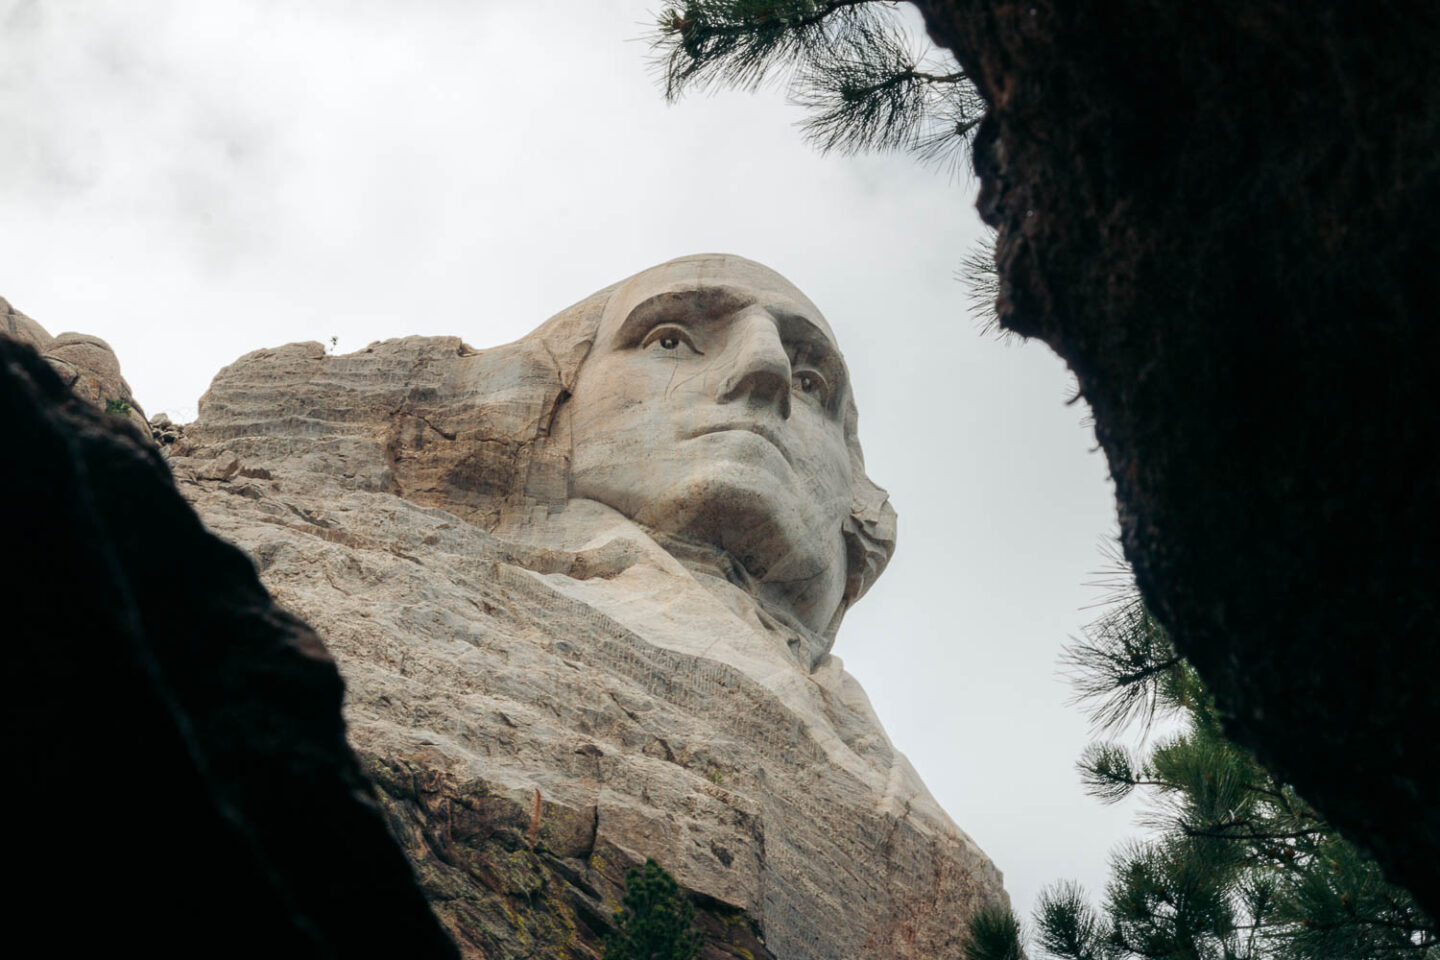 Mount Rushmore National Memorial - Roads and Destinations